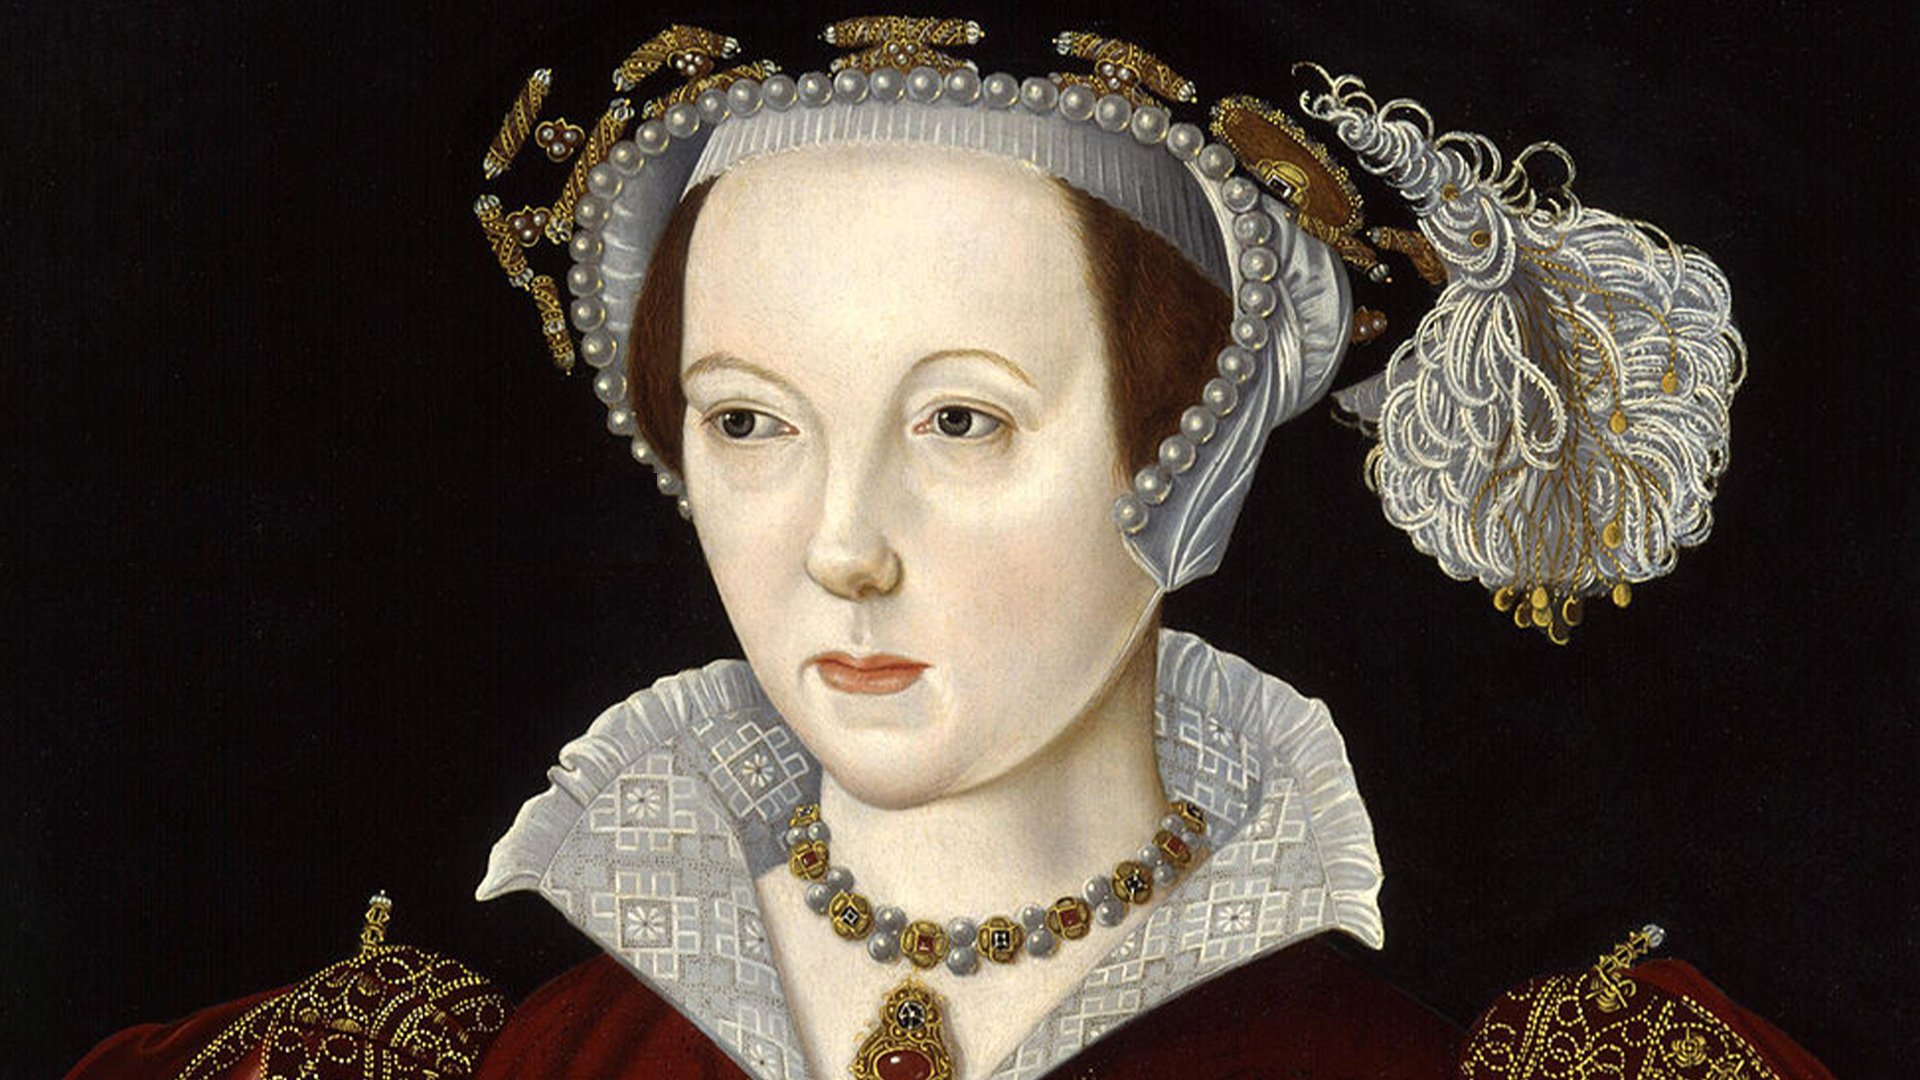 Henry VIII's last wife